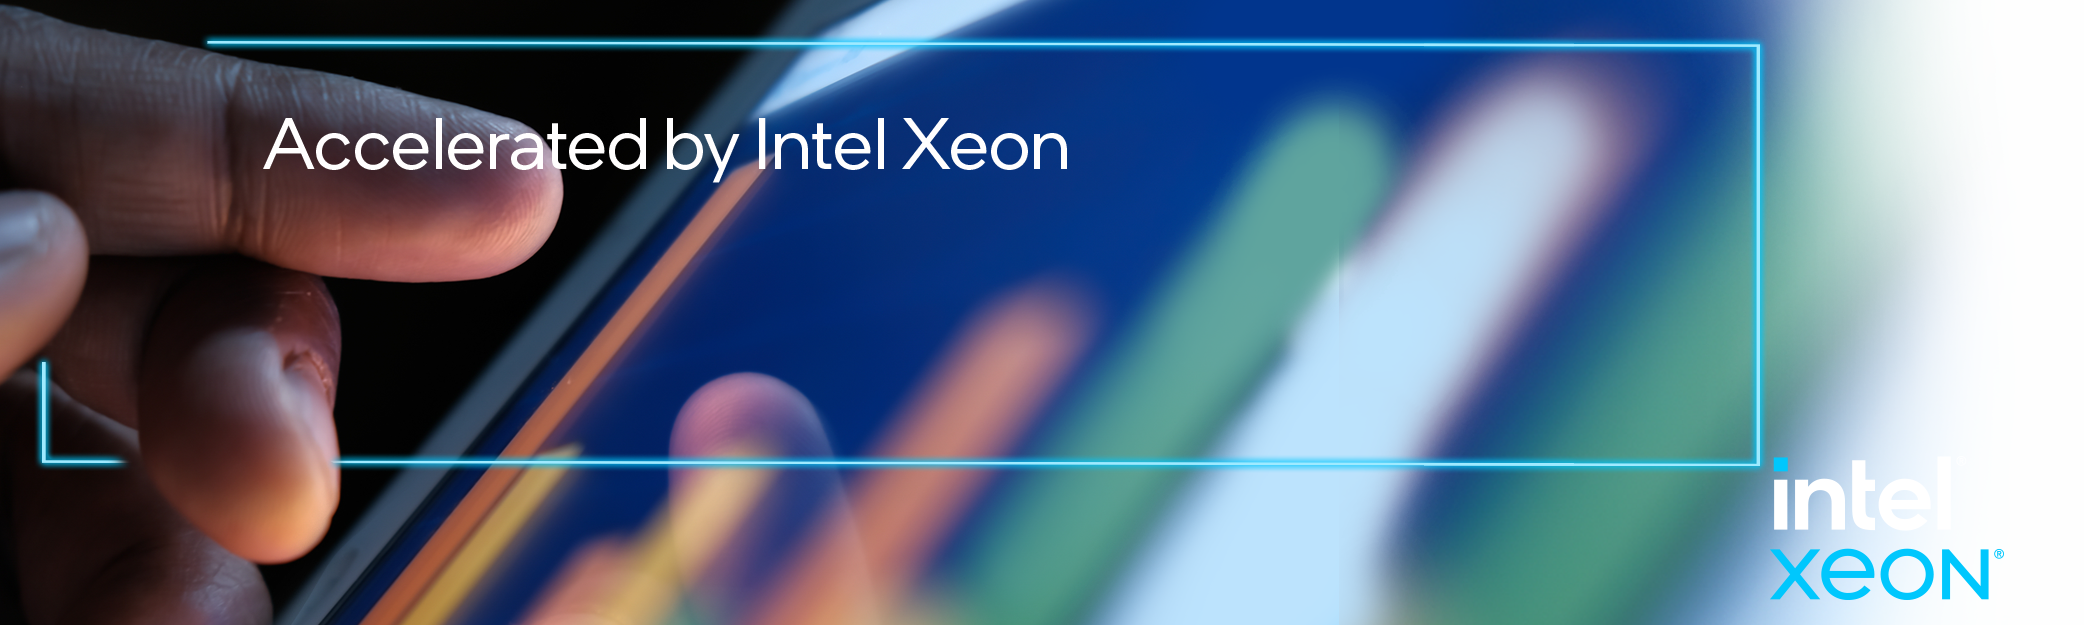 Intel Xeon 4th Gen